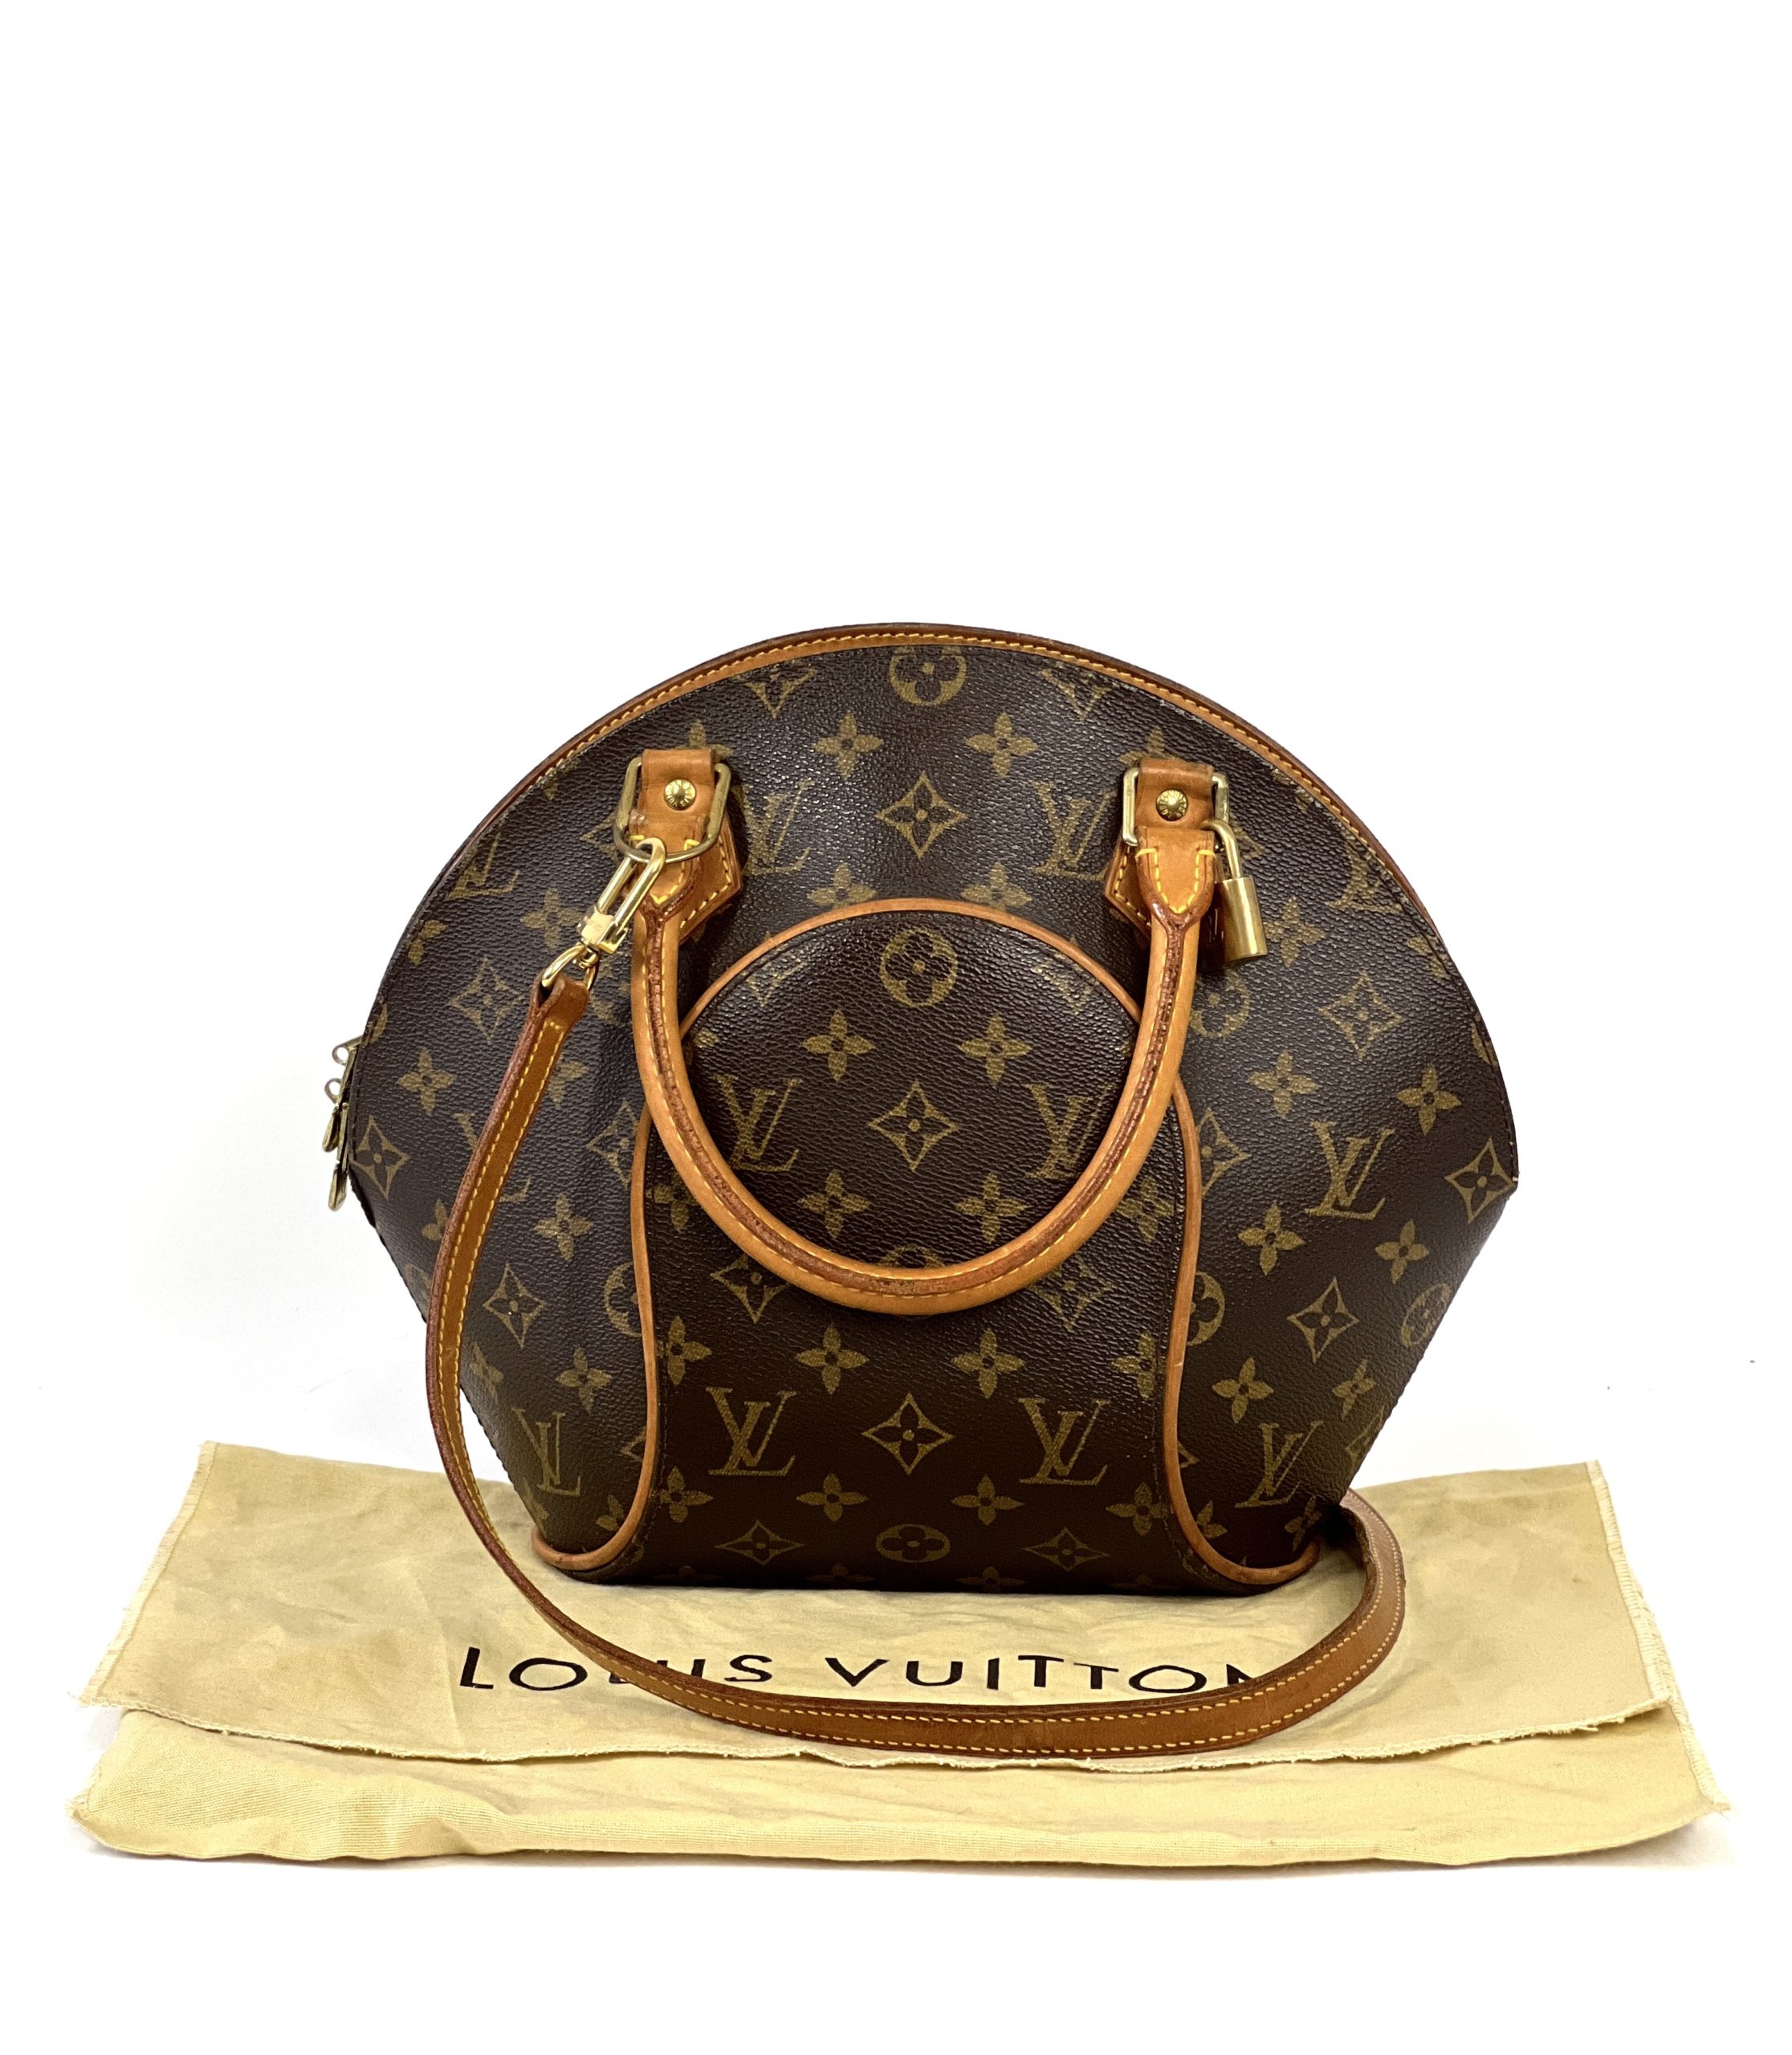 Throwback Thursday: Celebs and Their Louis Vuitton Alma Bags